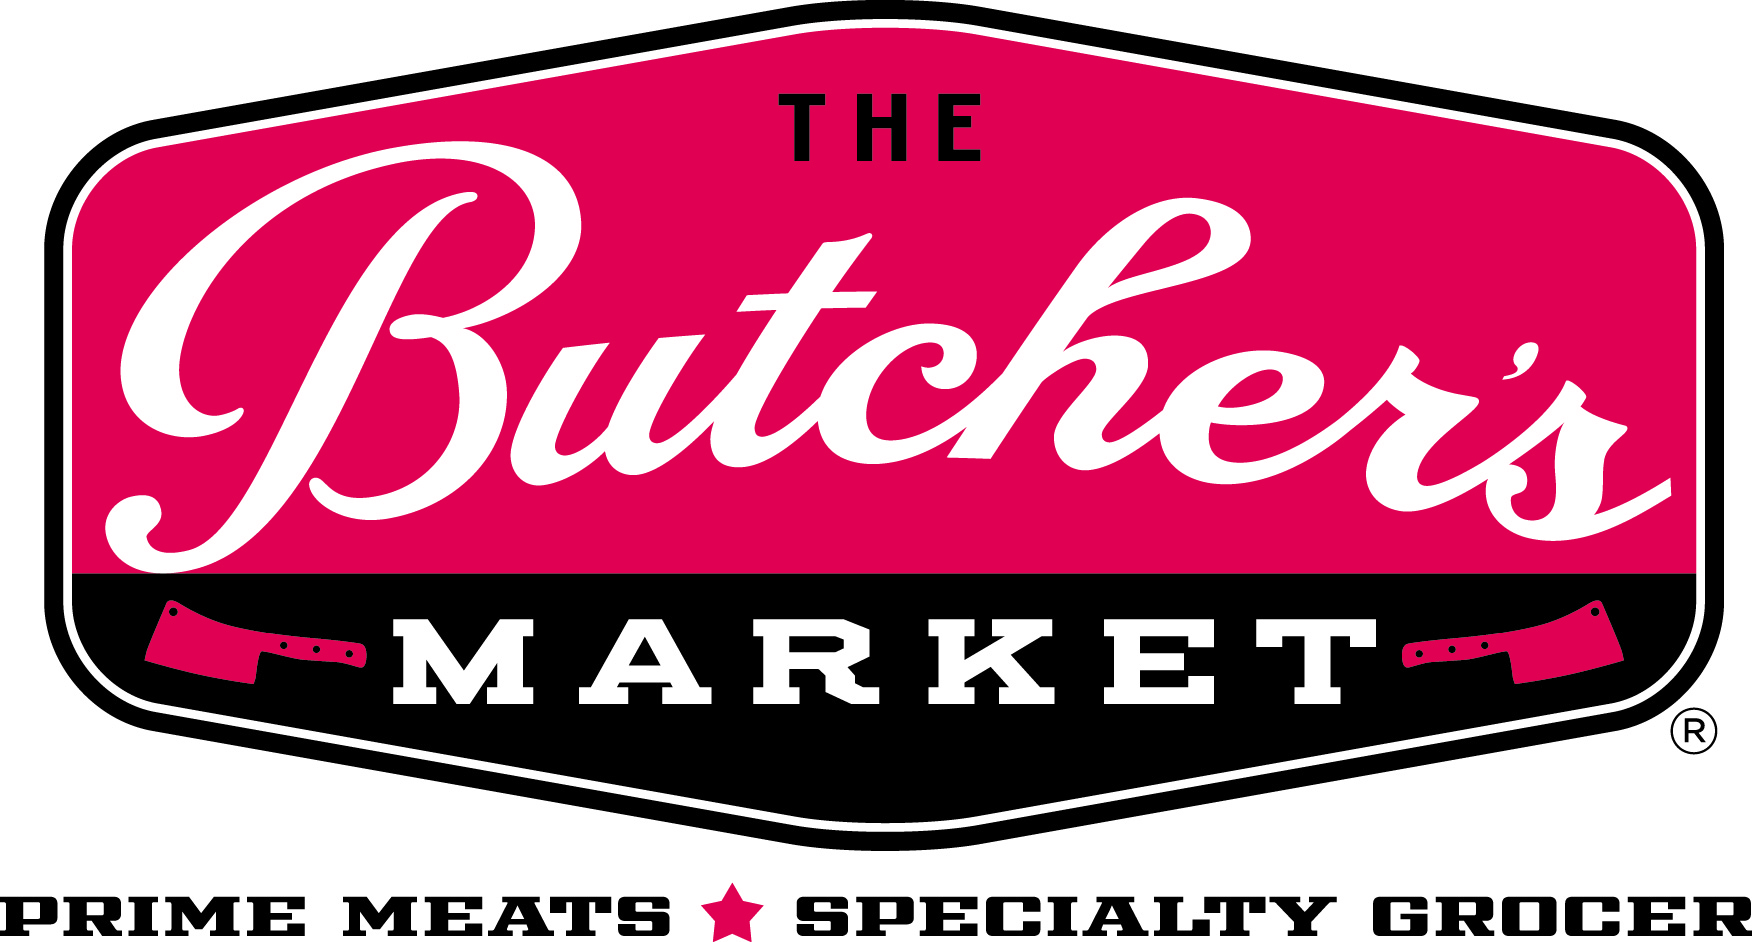 The Butchers Market Logo